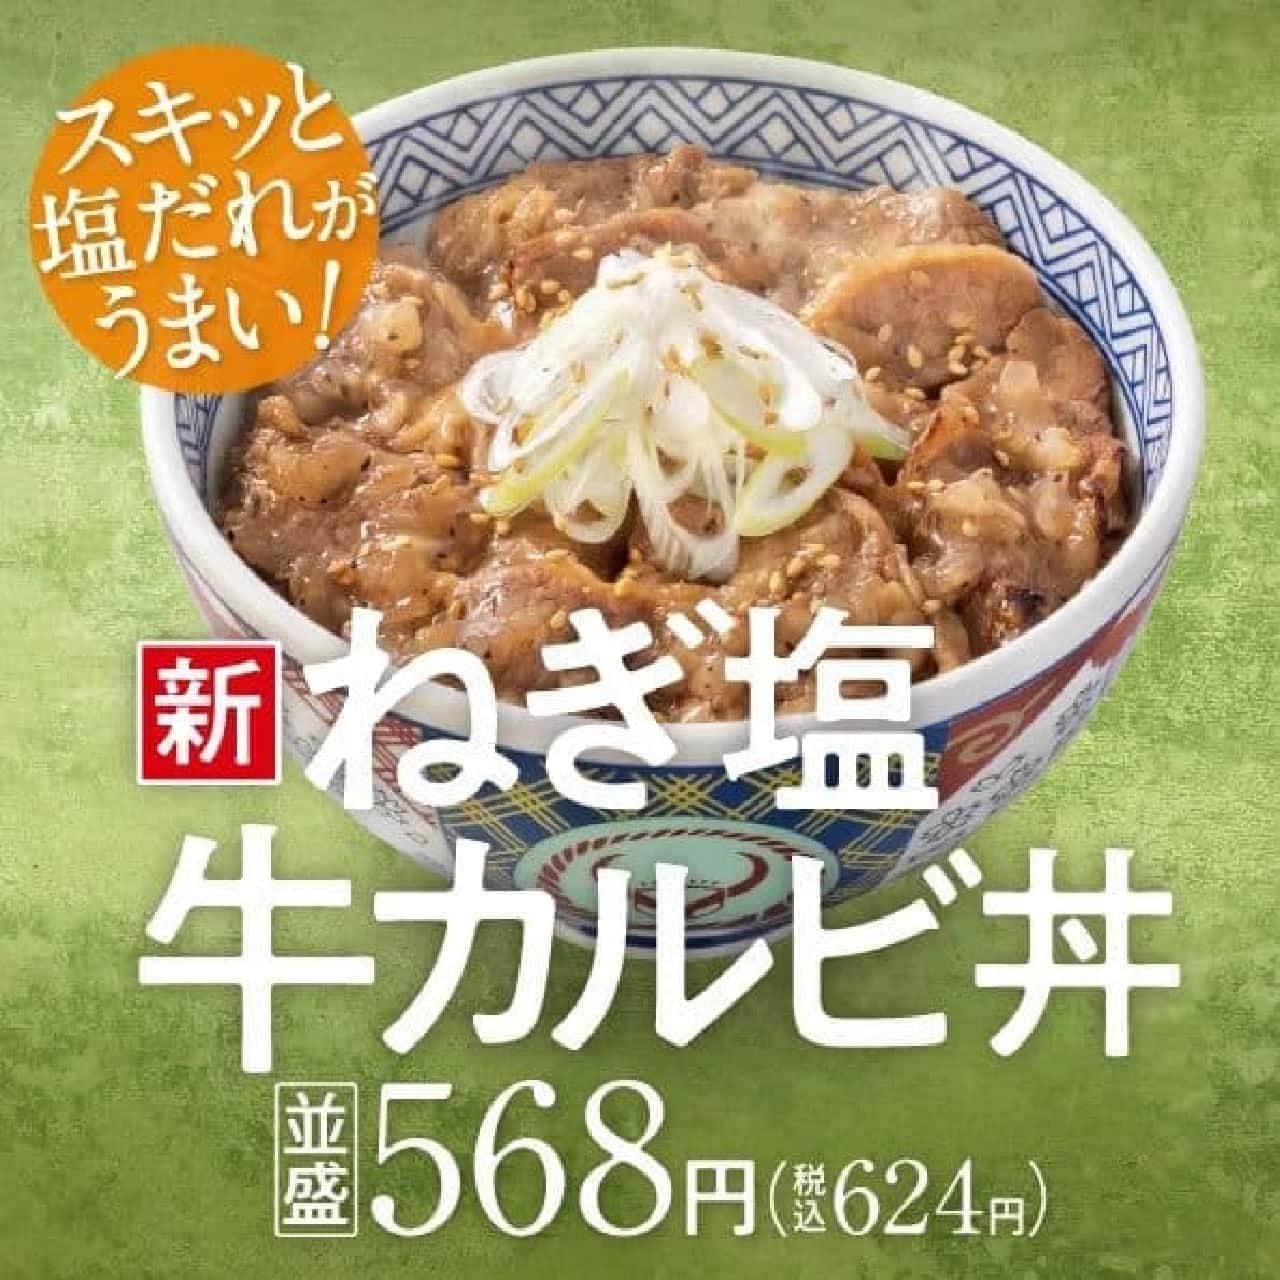 Yoshinoya "Negi-Shio Beef Kalbi Donburi" (Negi-Shio Beef Kalbi Bowl)